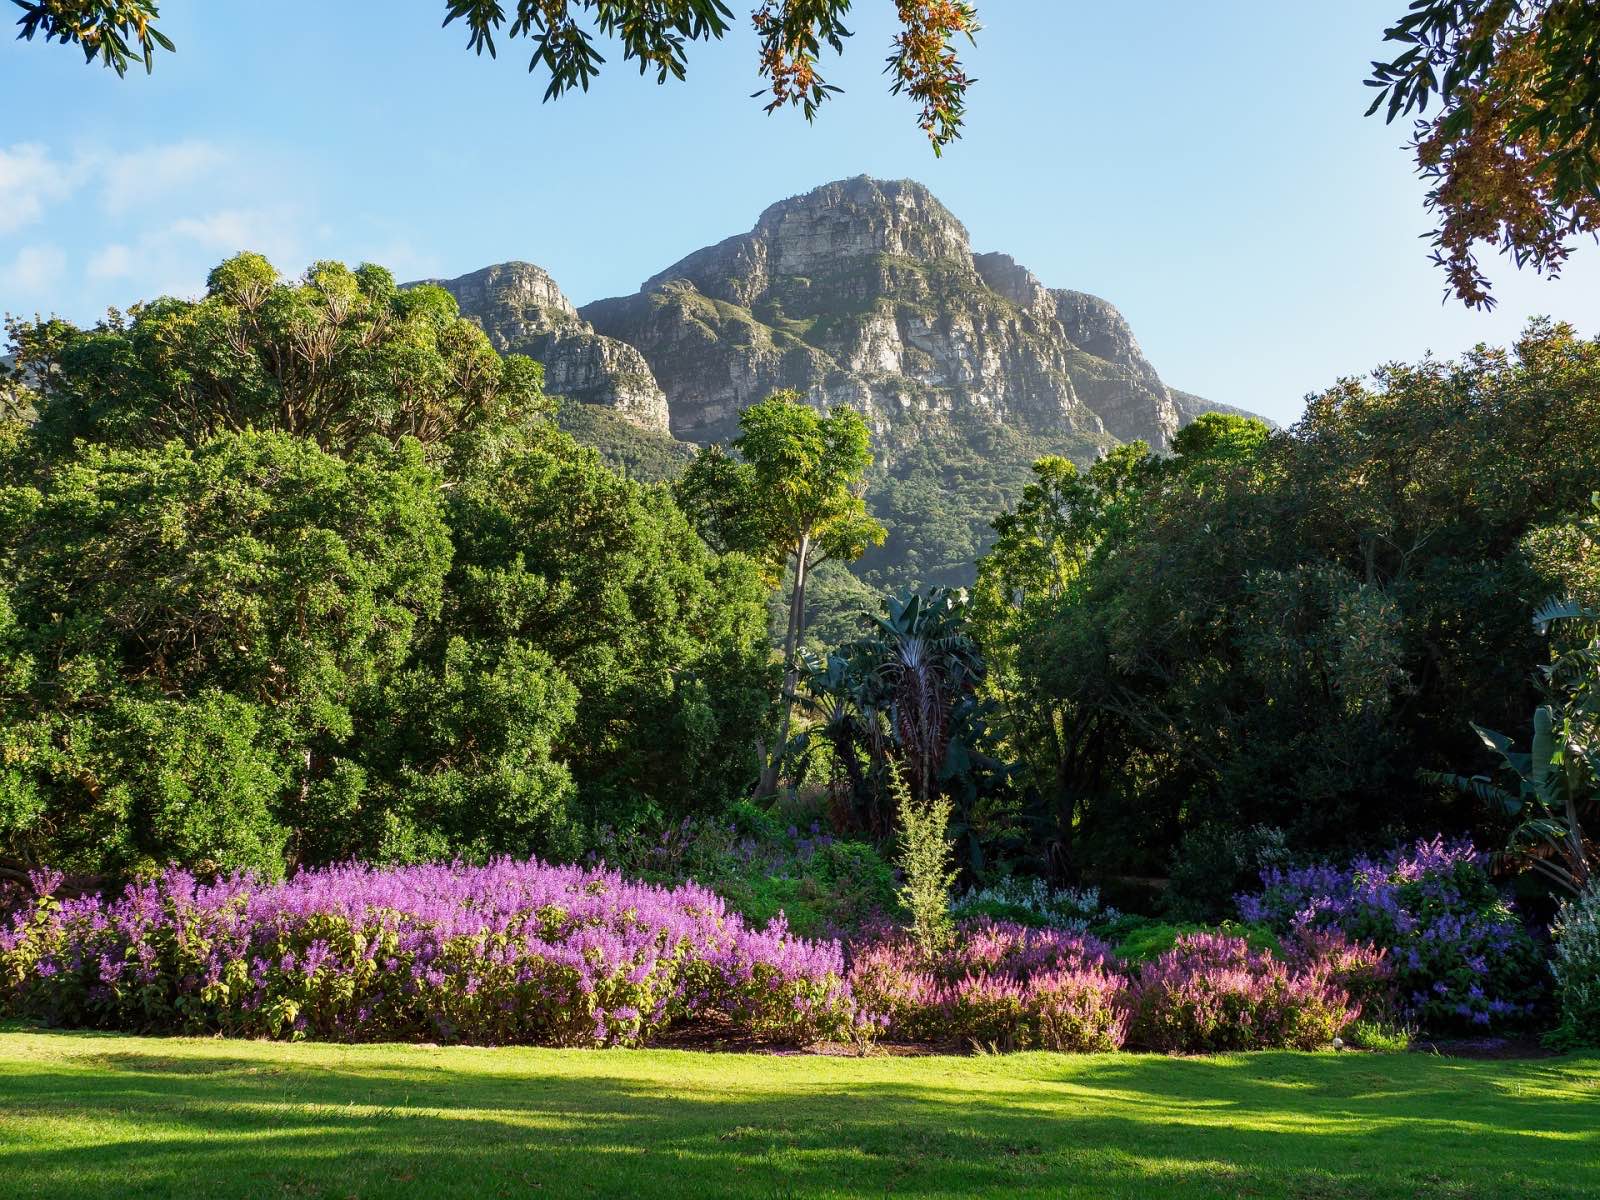 Kirstenbosch National Botanical Garden offering one of the best flower experiences in the world